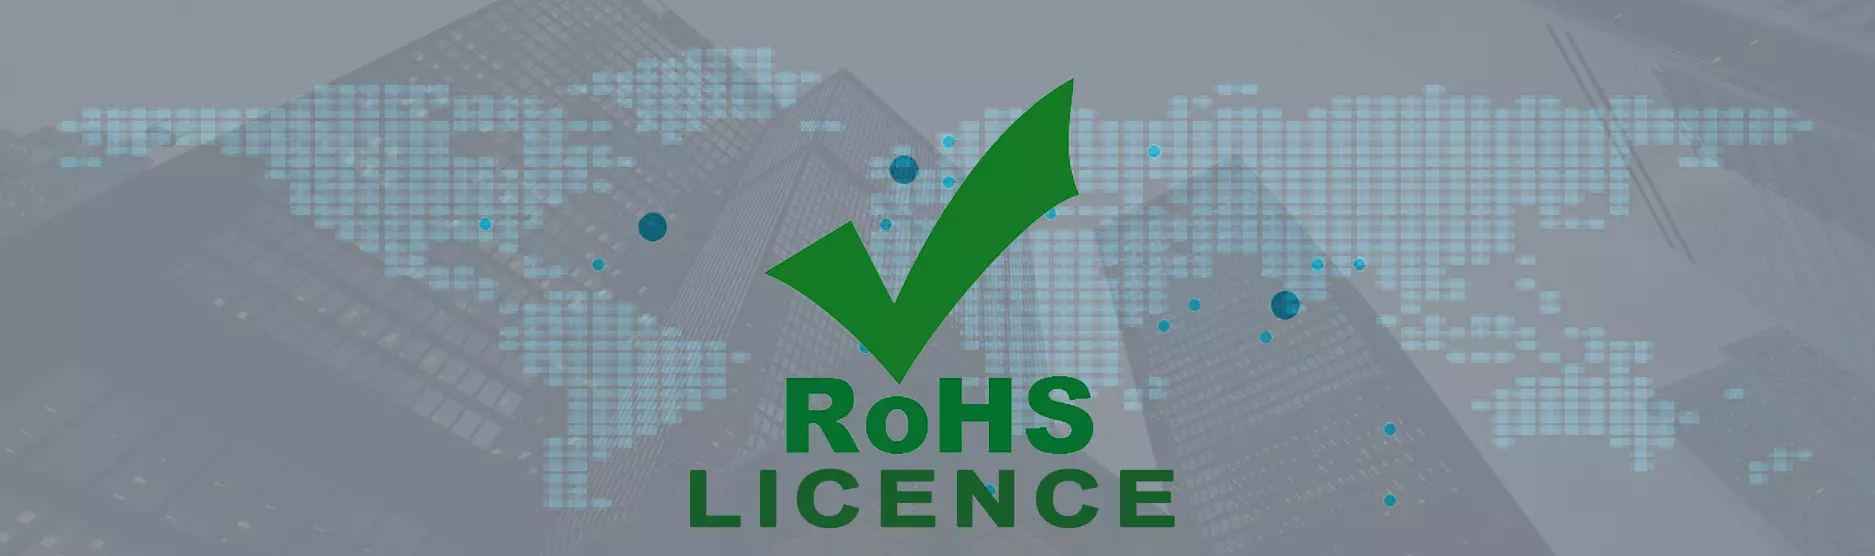 RoHS Certification (Restriction of Hazardous Substance)  